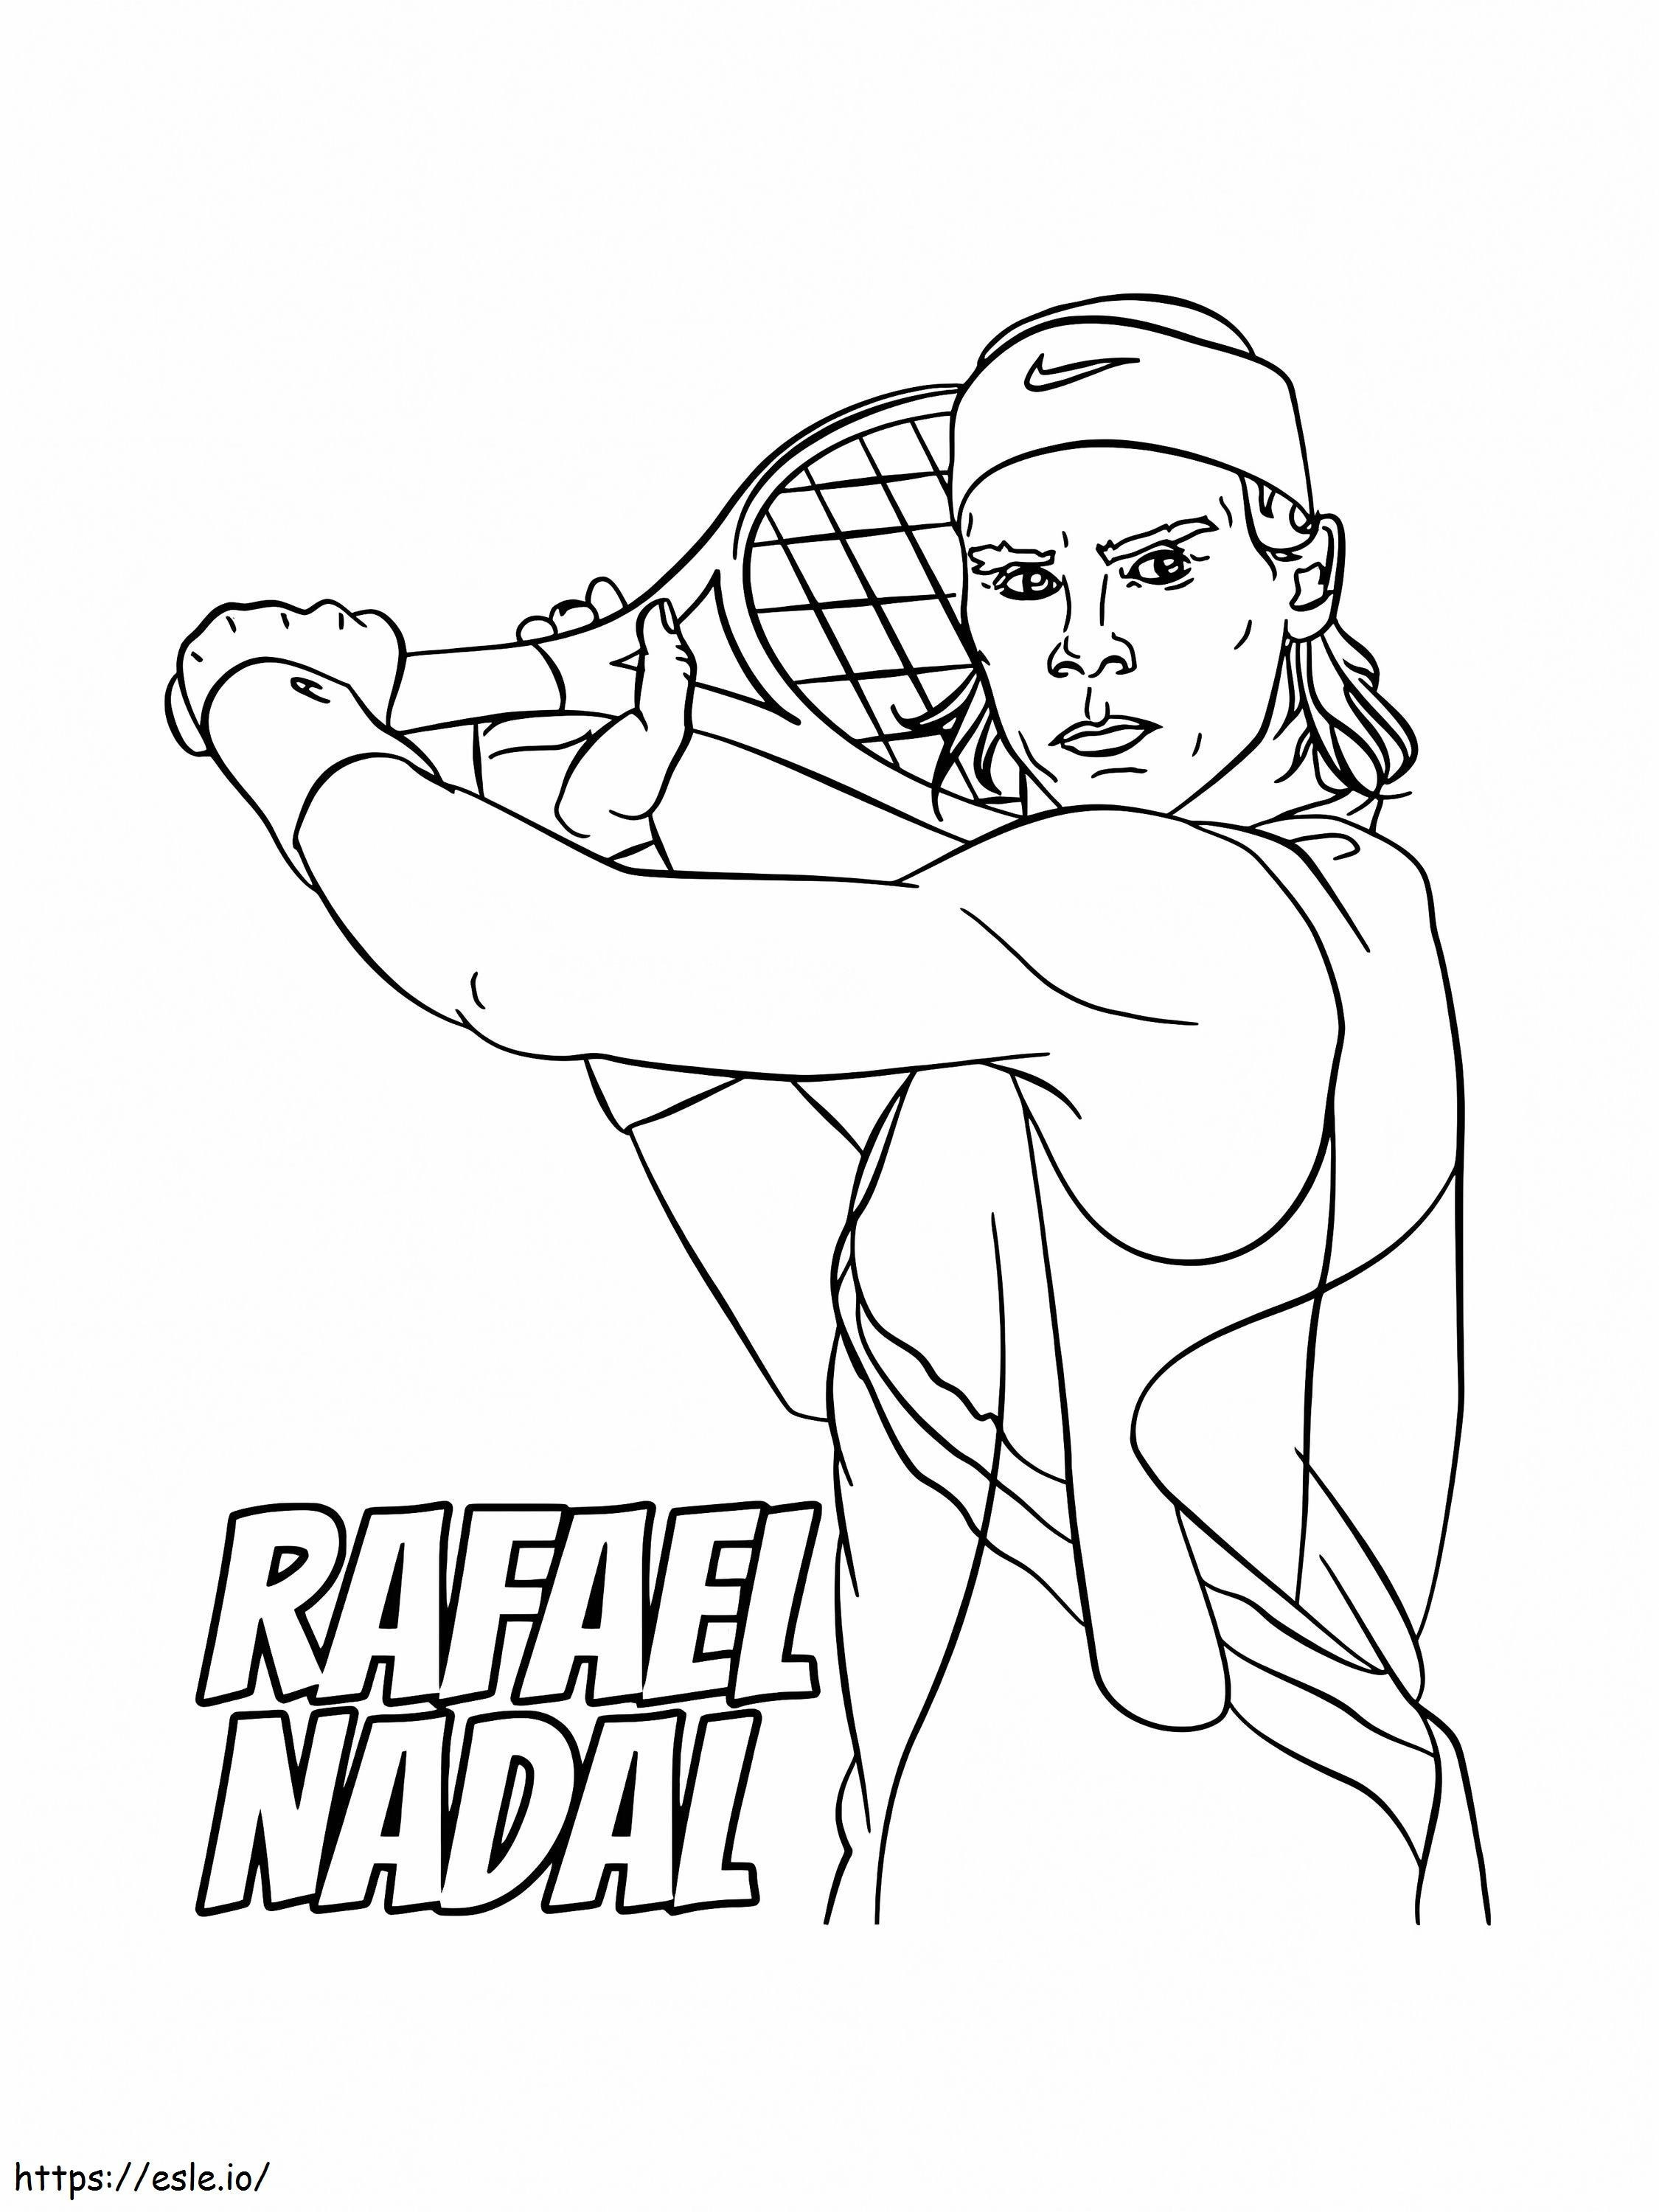 Rafael Nadal gra w tenisa kolorowanka